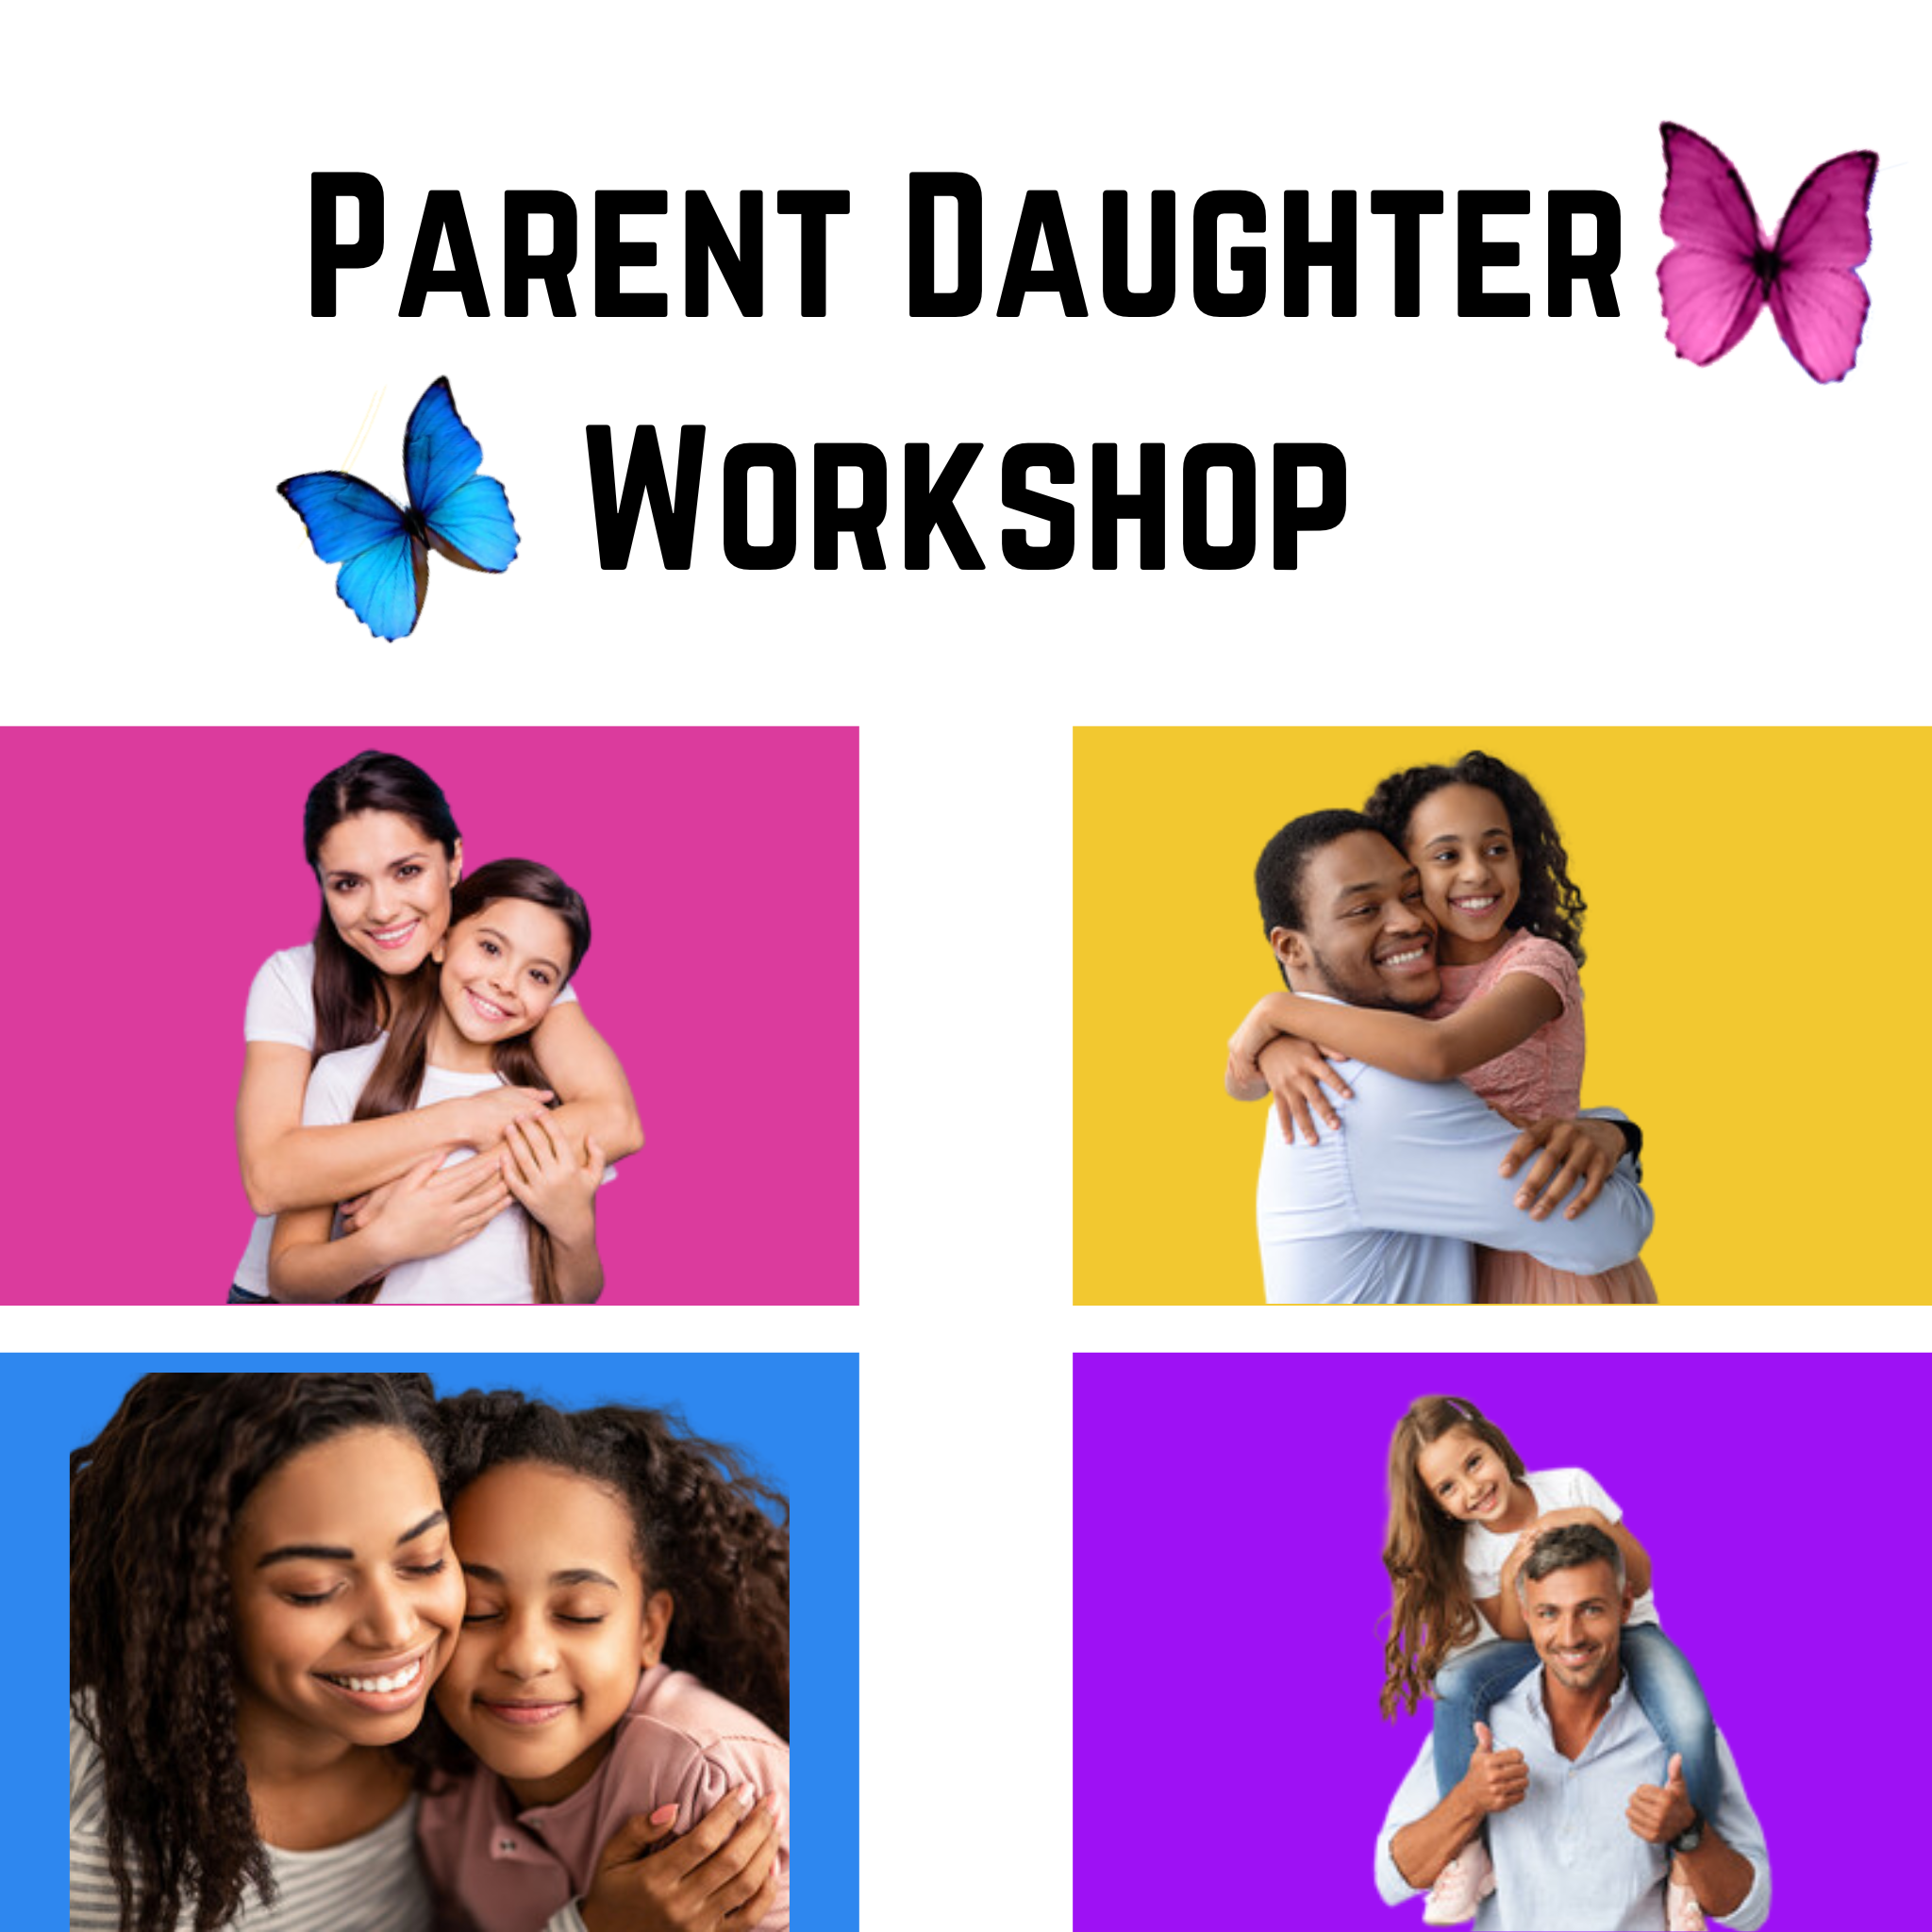 Parent-Daughter Bonding Workshop: A Journey of Connection and Understanding